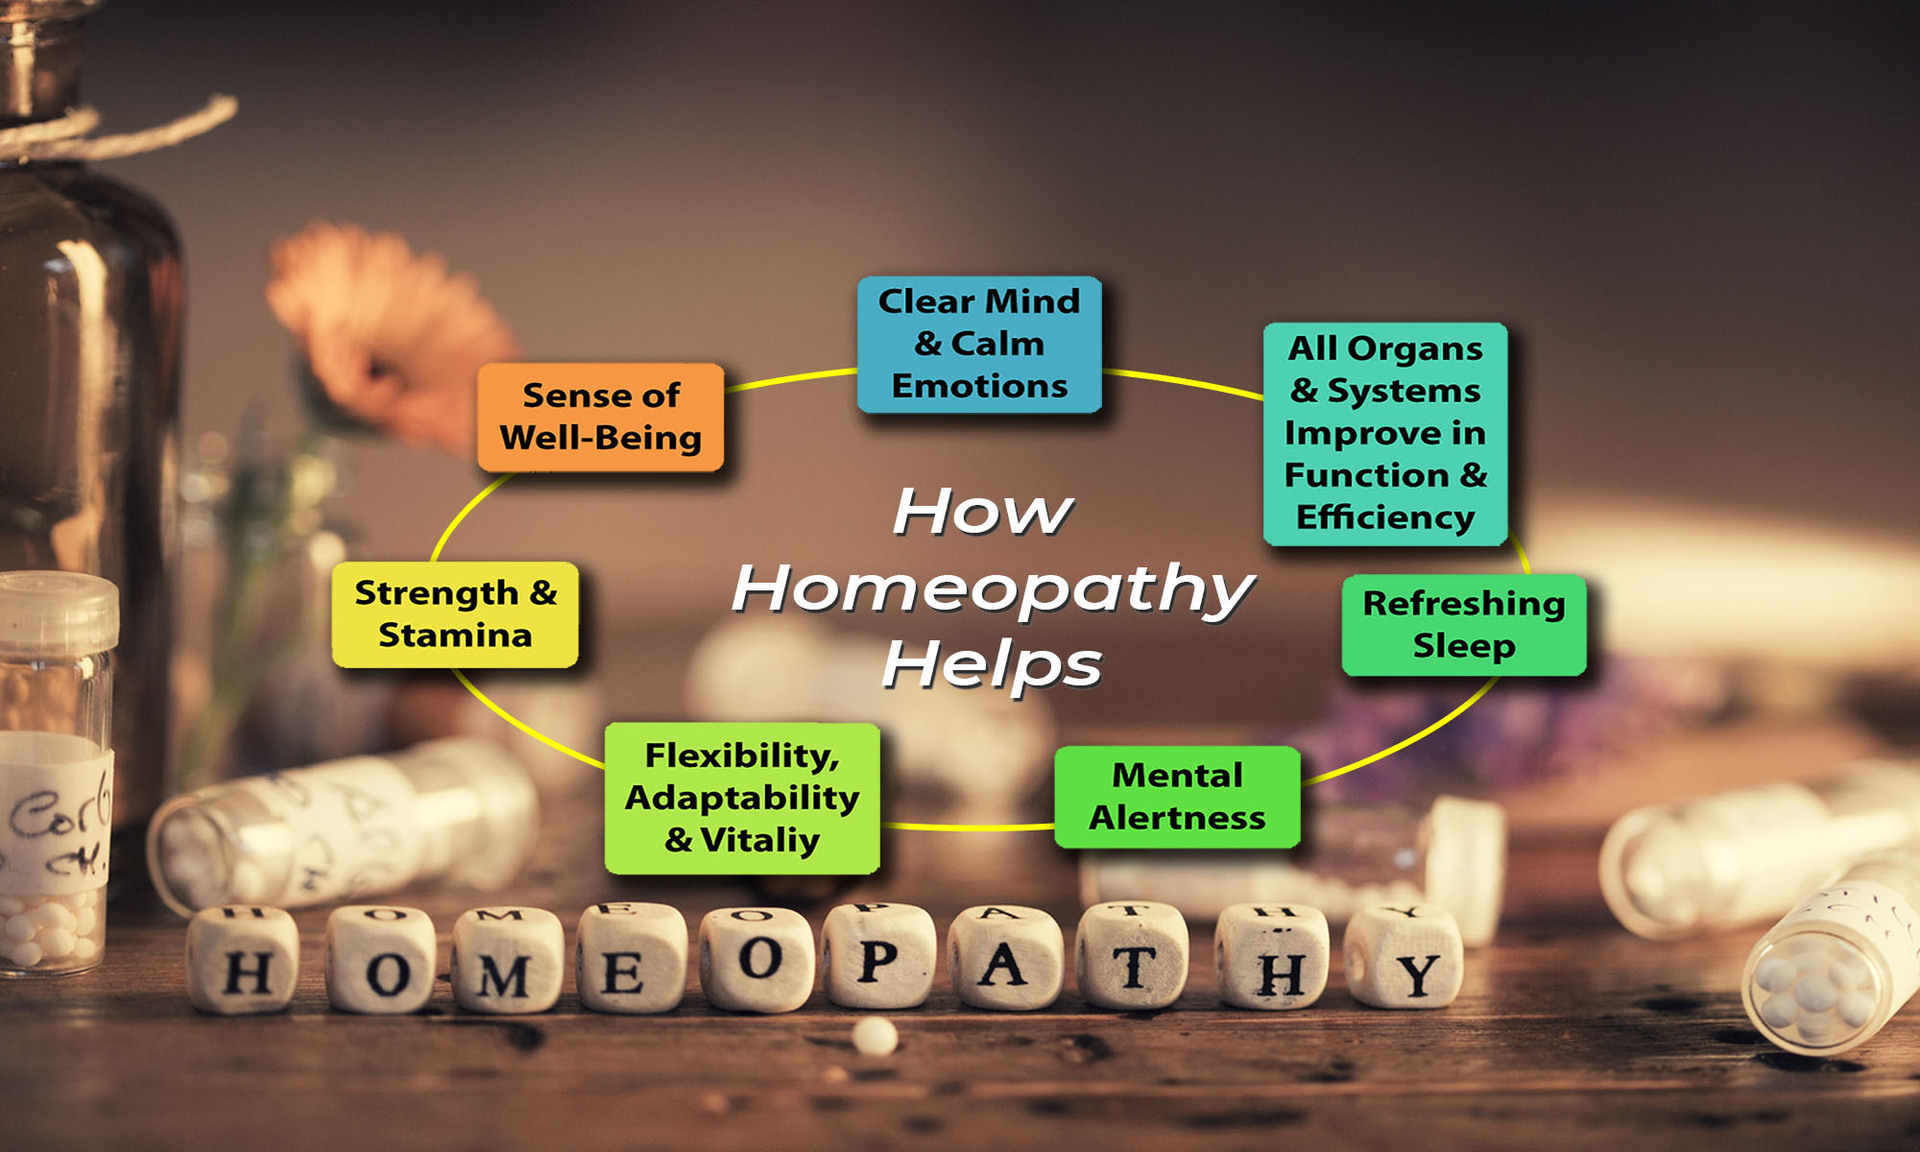 vibrational health - Homoeopathy